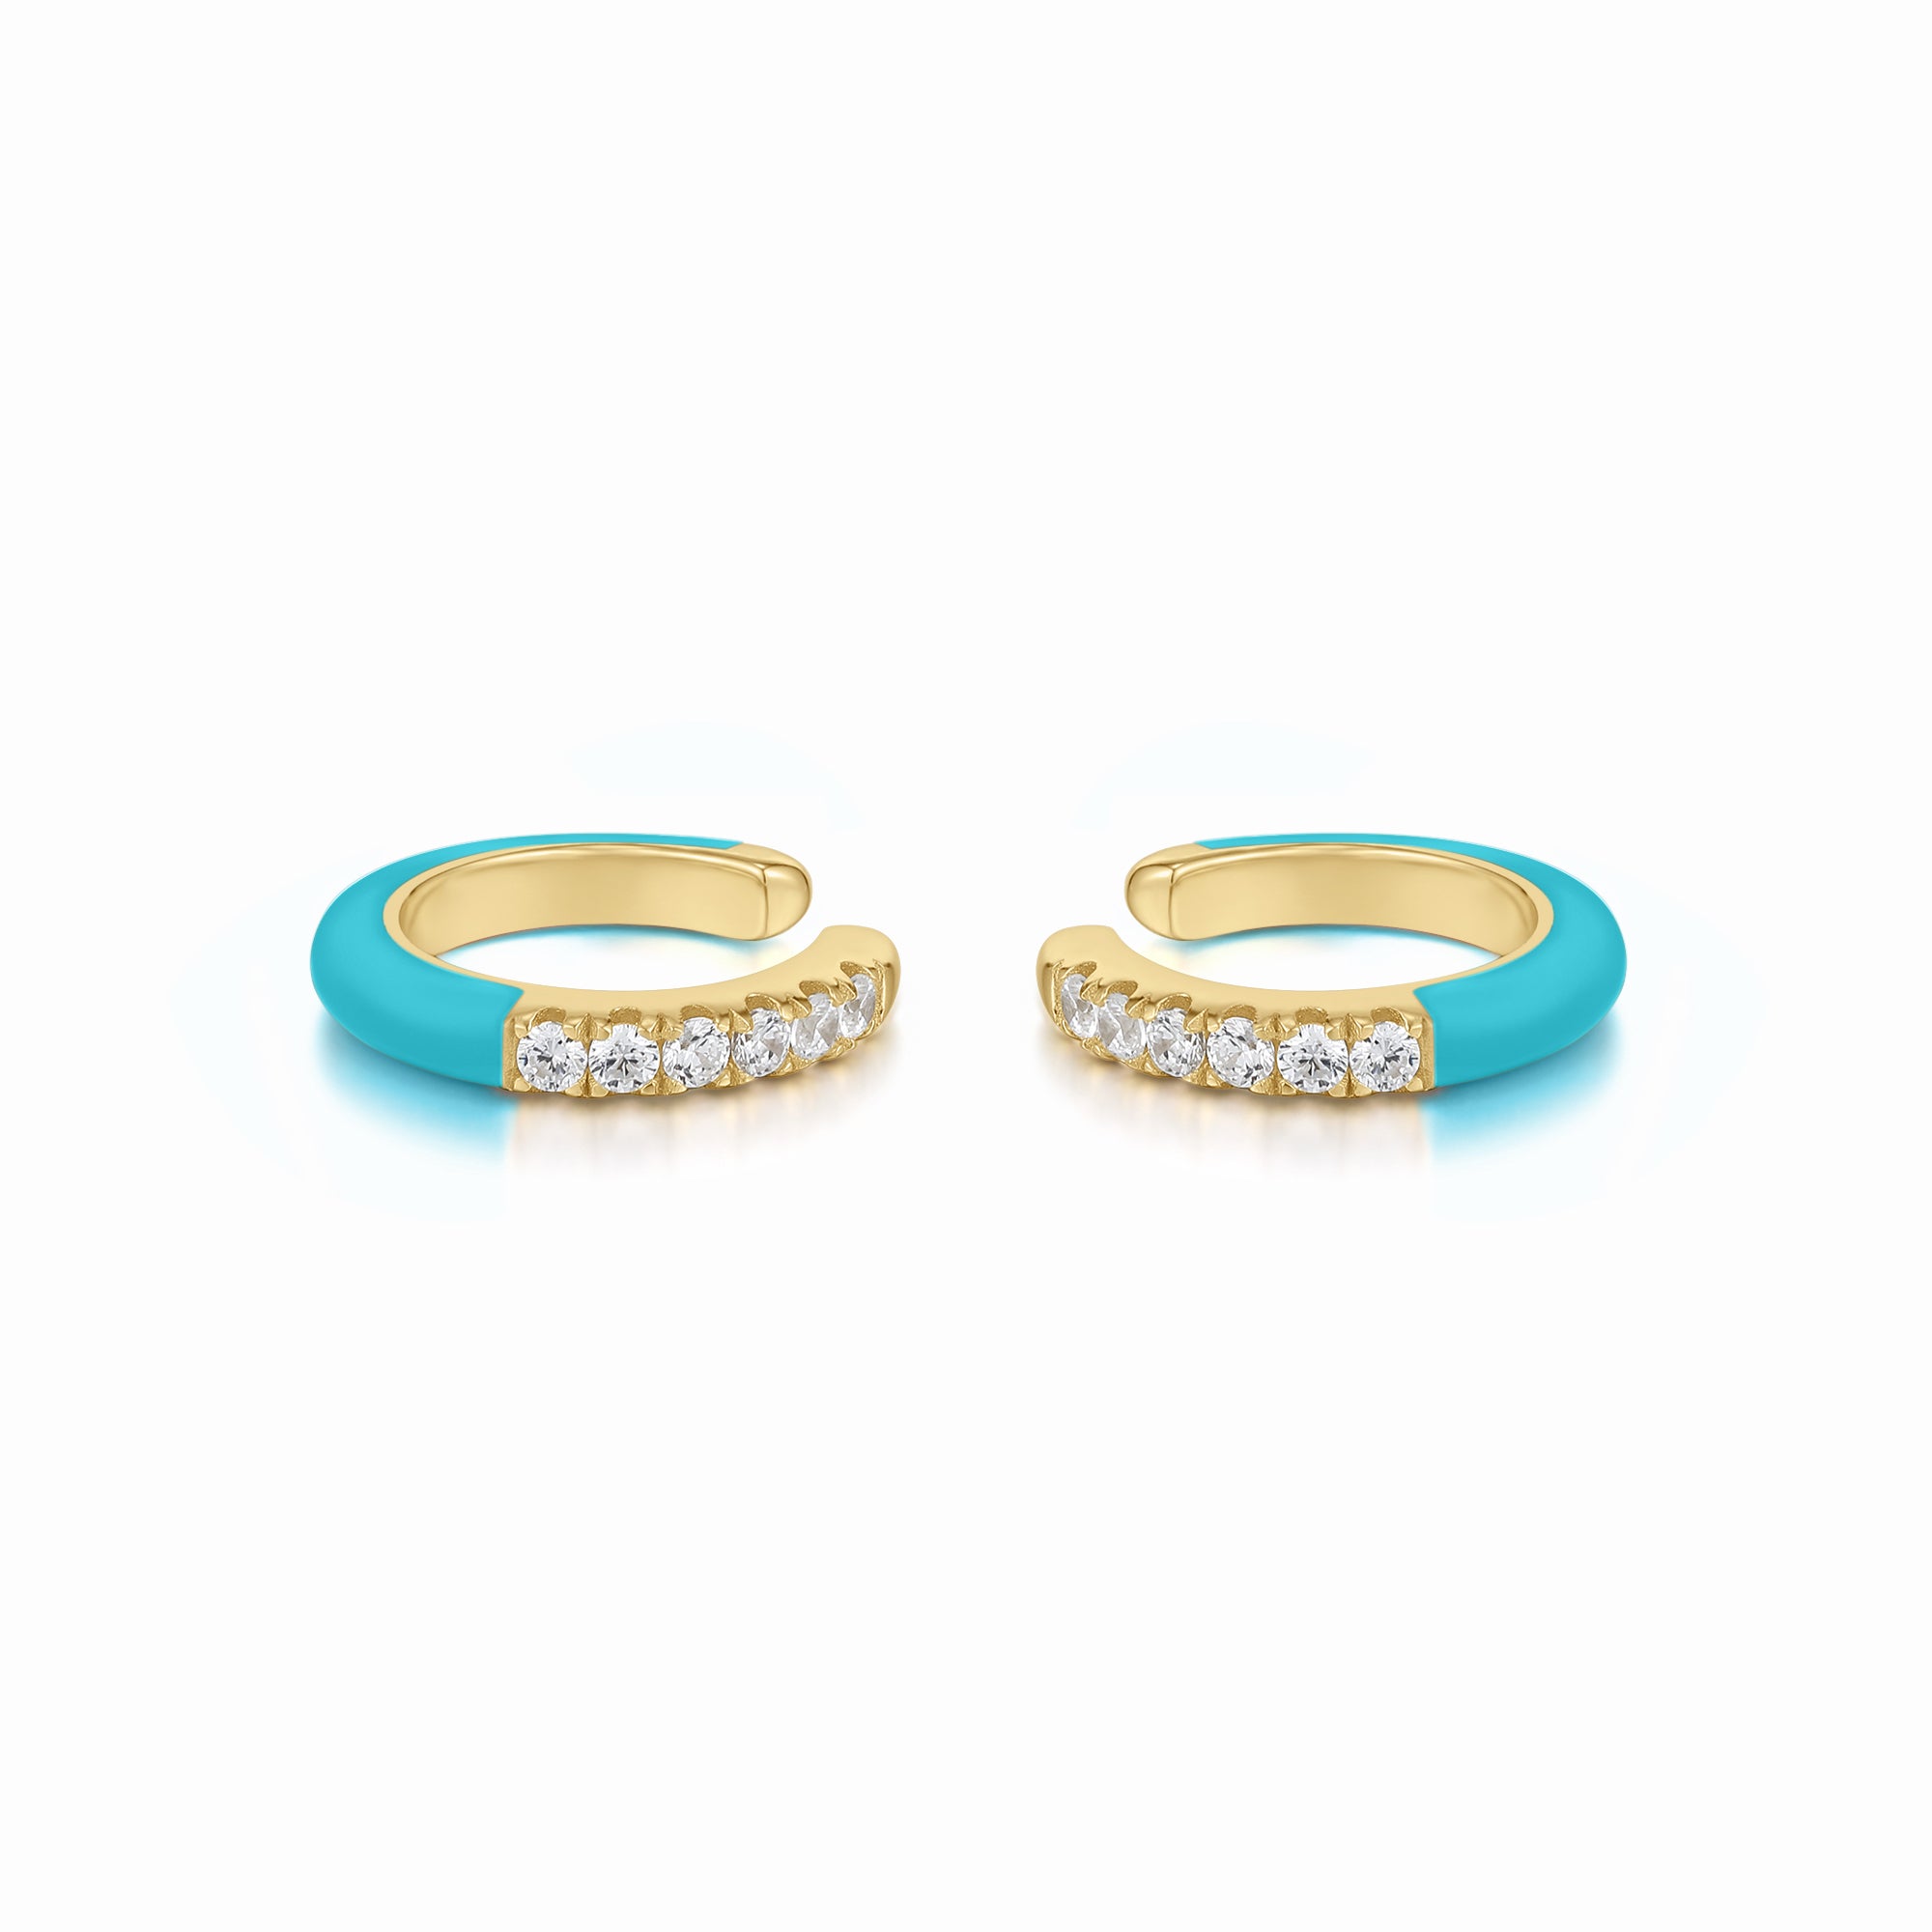 Cardea | Morel Earrings | 925 Silver | Turquoise Enamel & White CZ | 14K Gold Plated